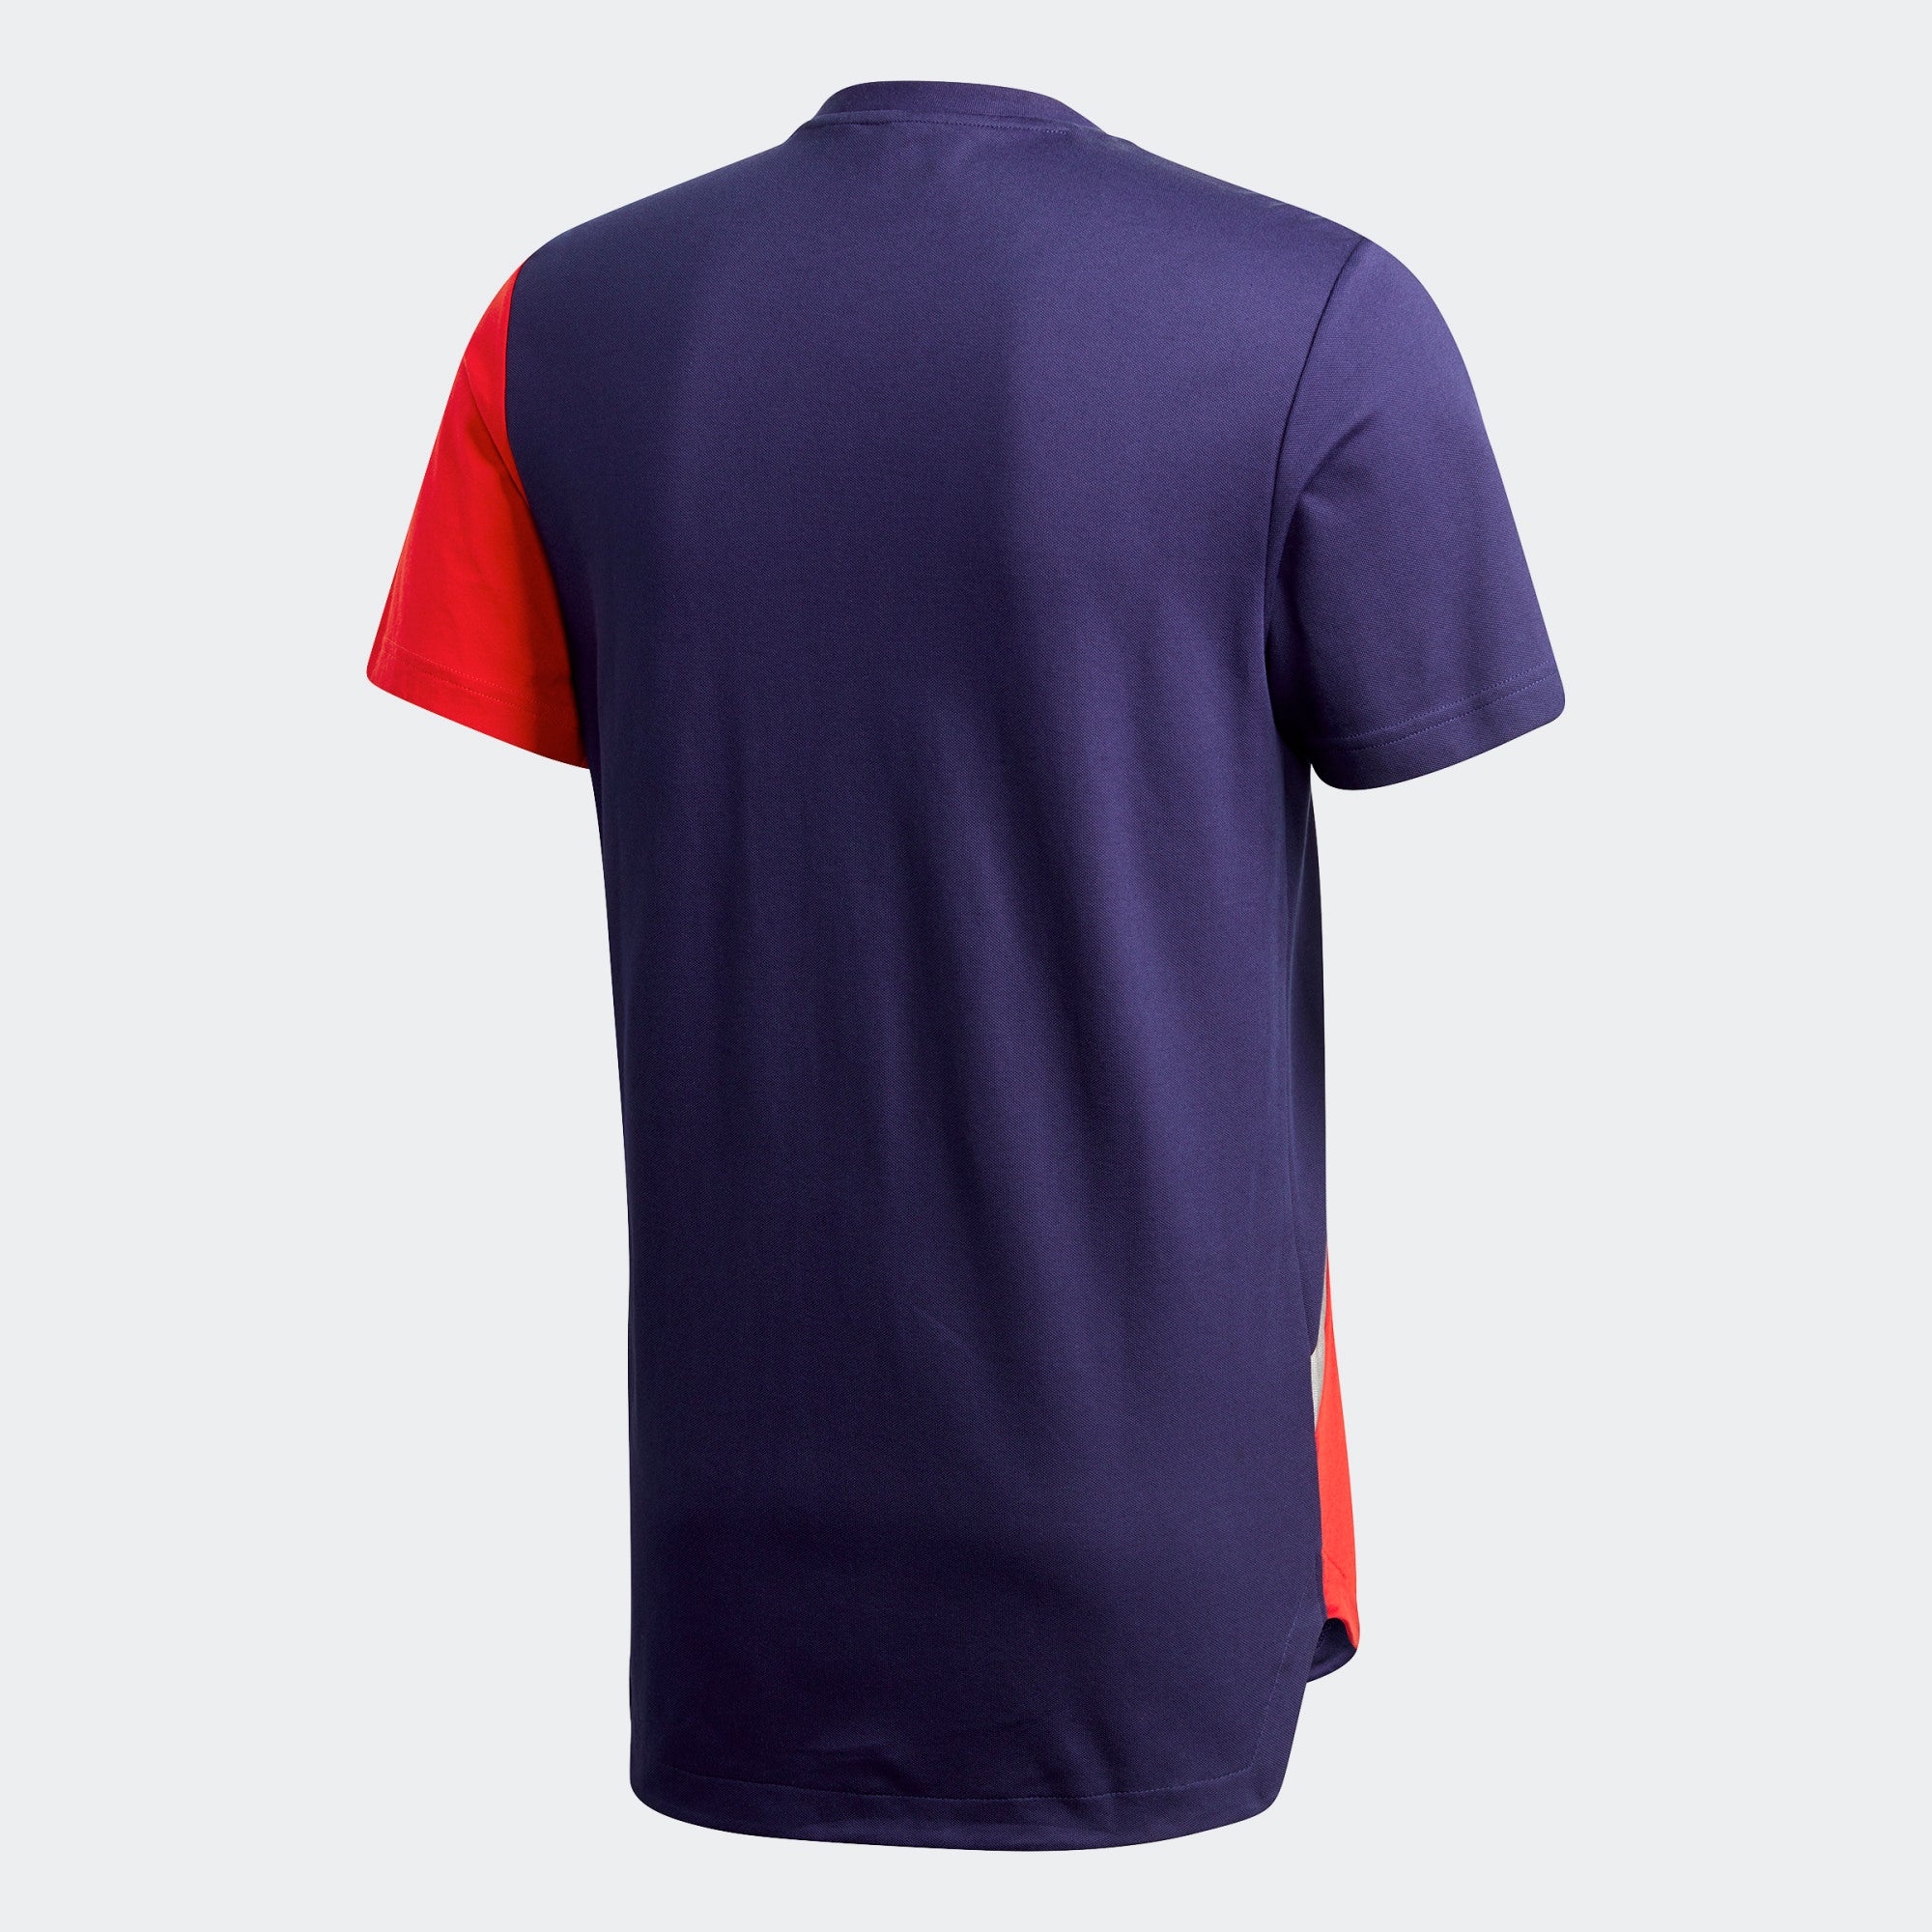 tradesports.co.uk Adidas Men's Tango Block Training Shirt - Red